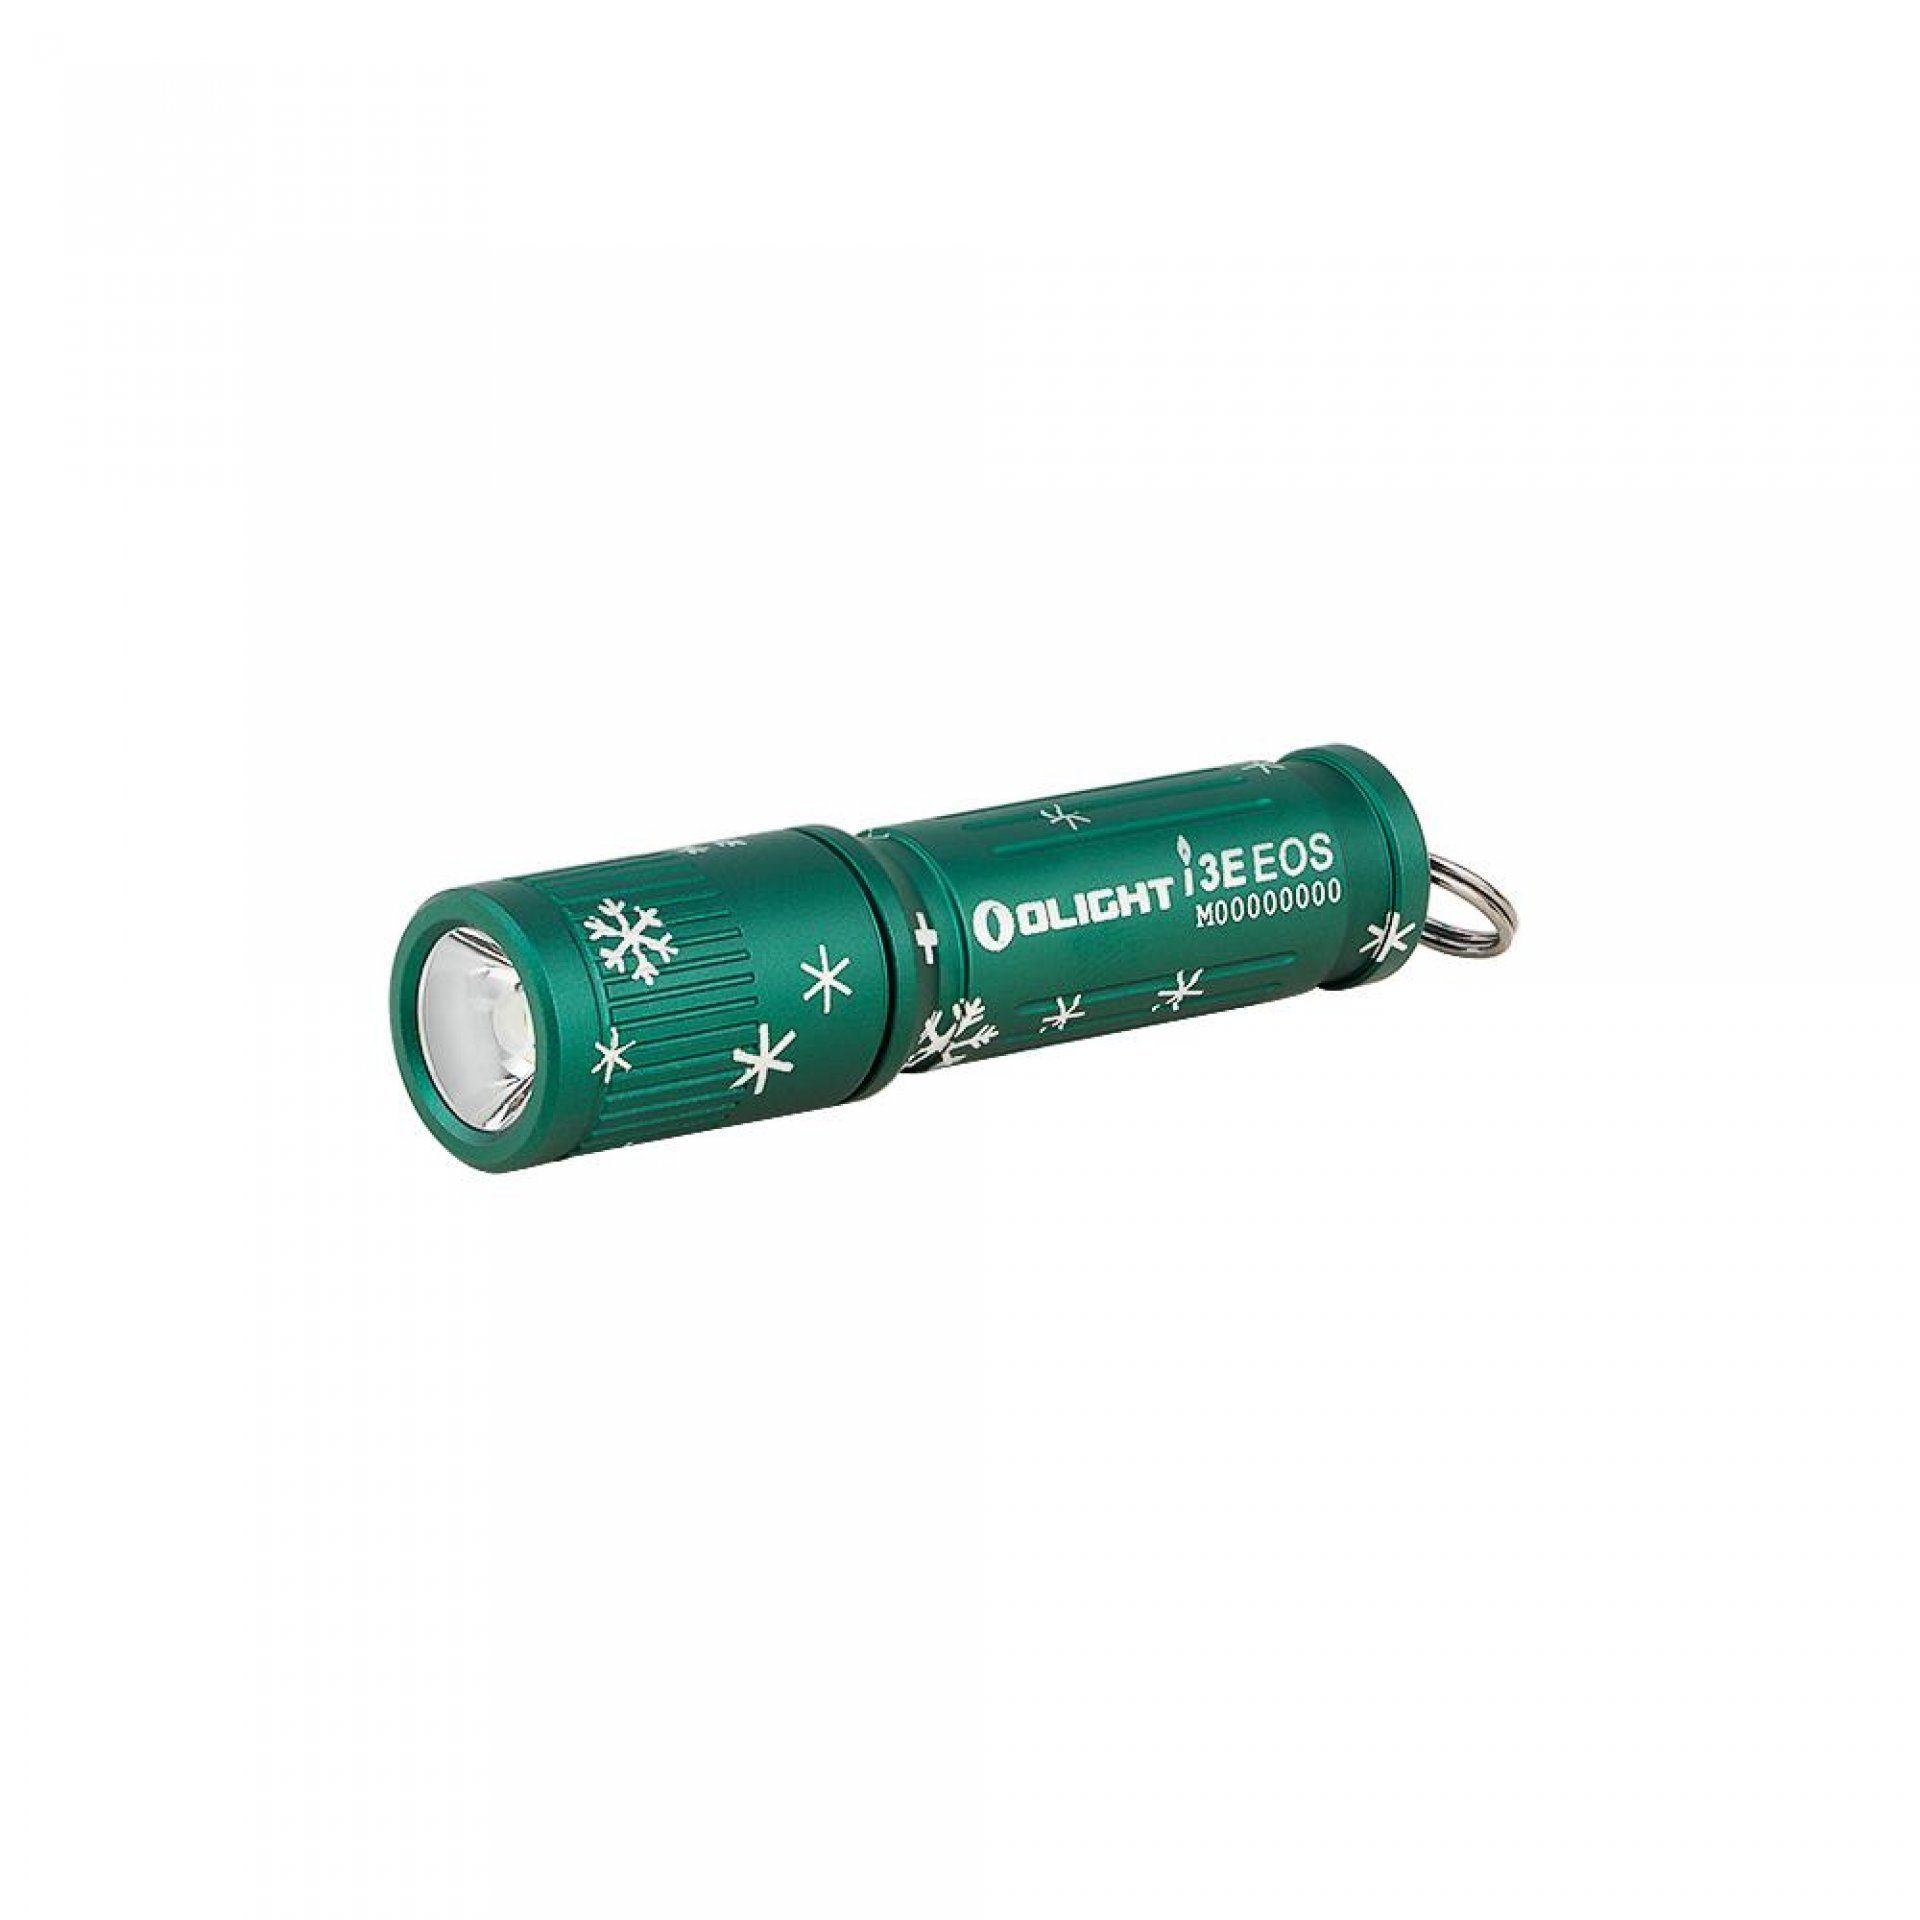 OLIGHT Taschenlampe OLIGHT I3E EOS Mini LED Taschenlampe Schlüsselanhänger 90 Lumen Schneeflocke Grüne